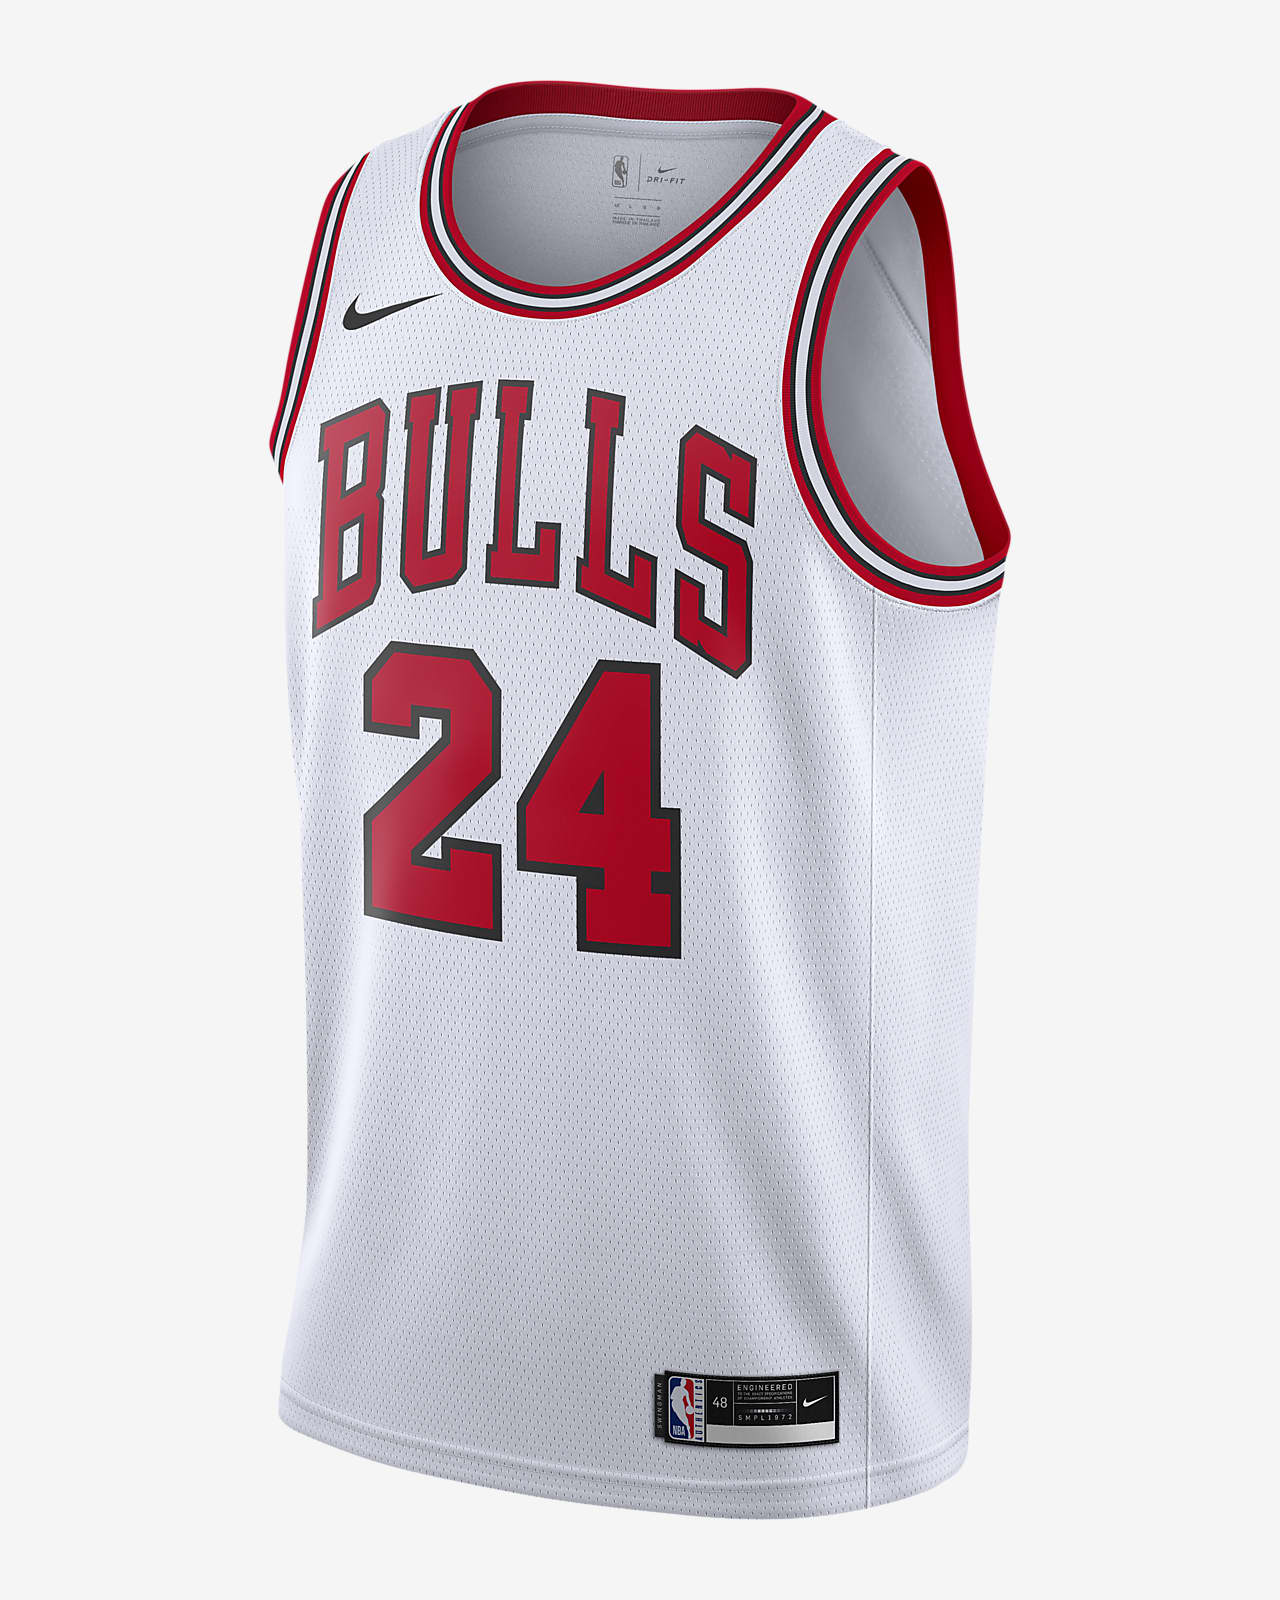 2020 bulls jersey